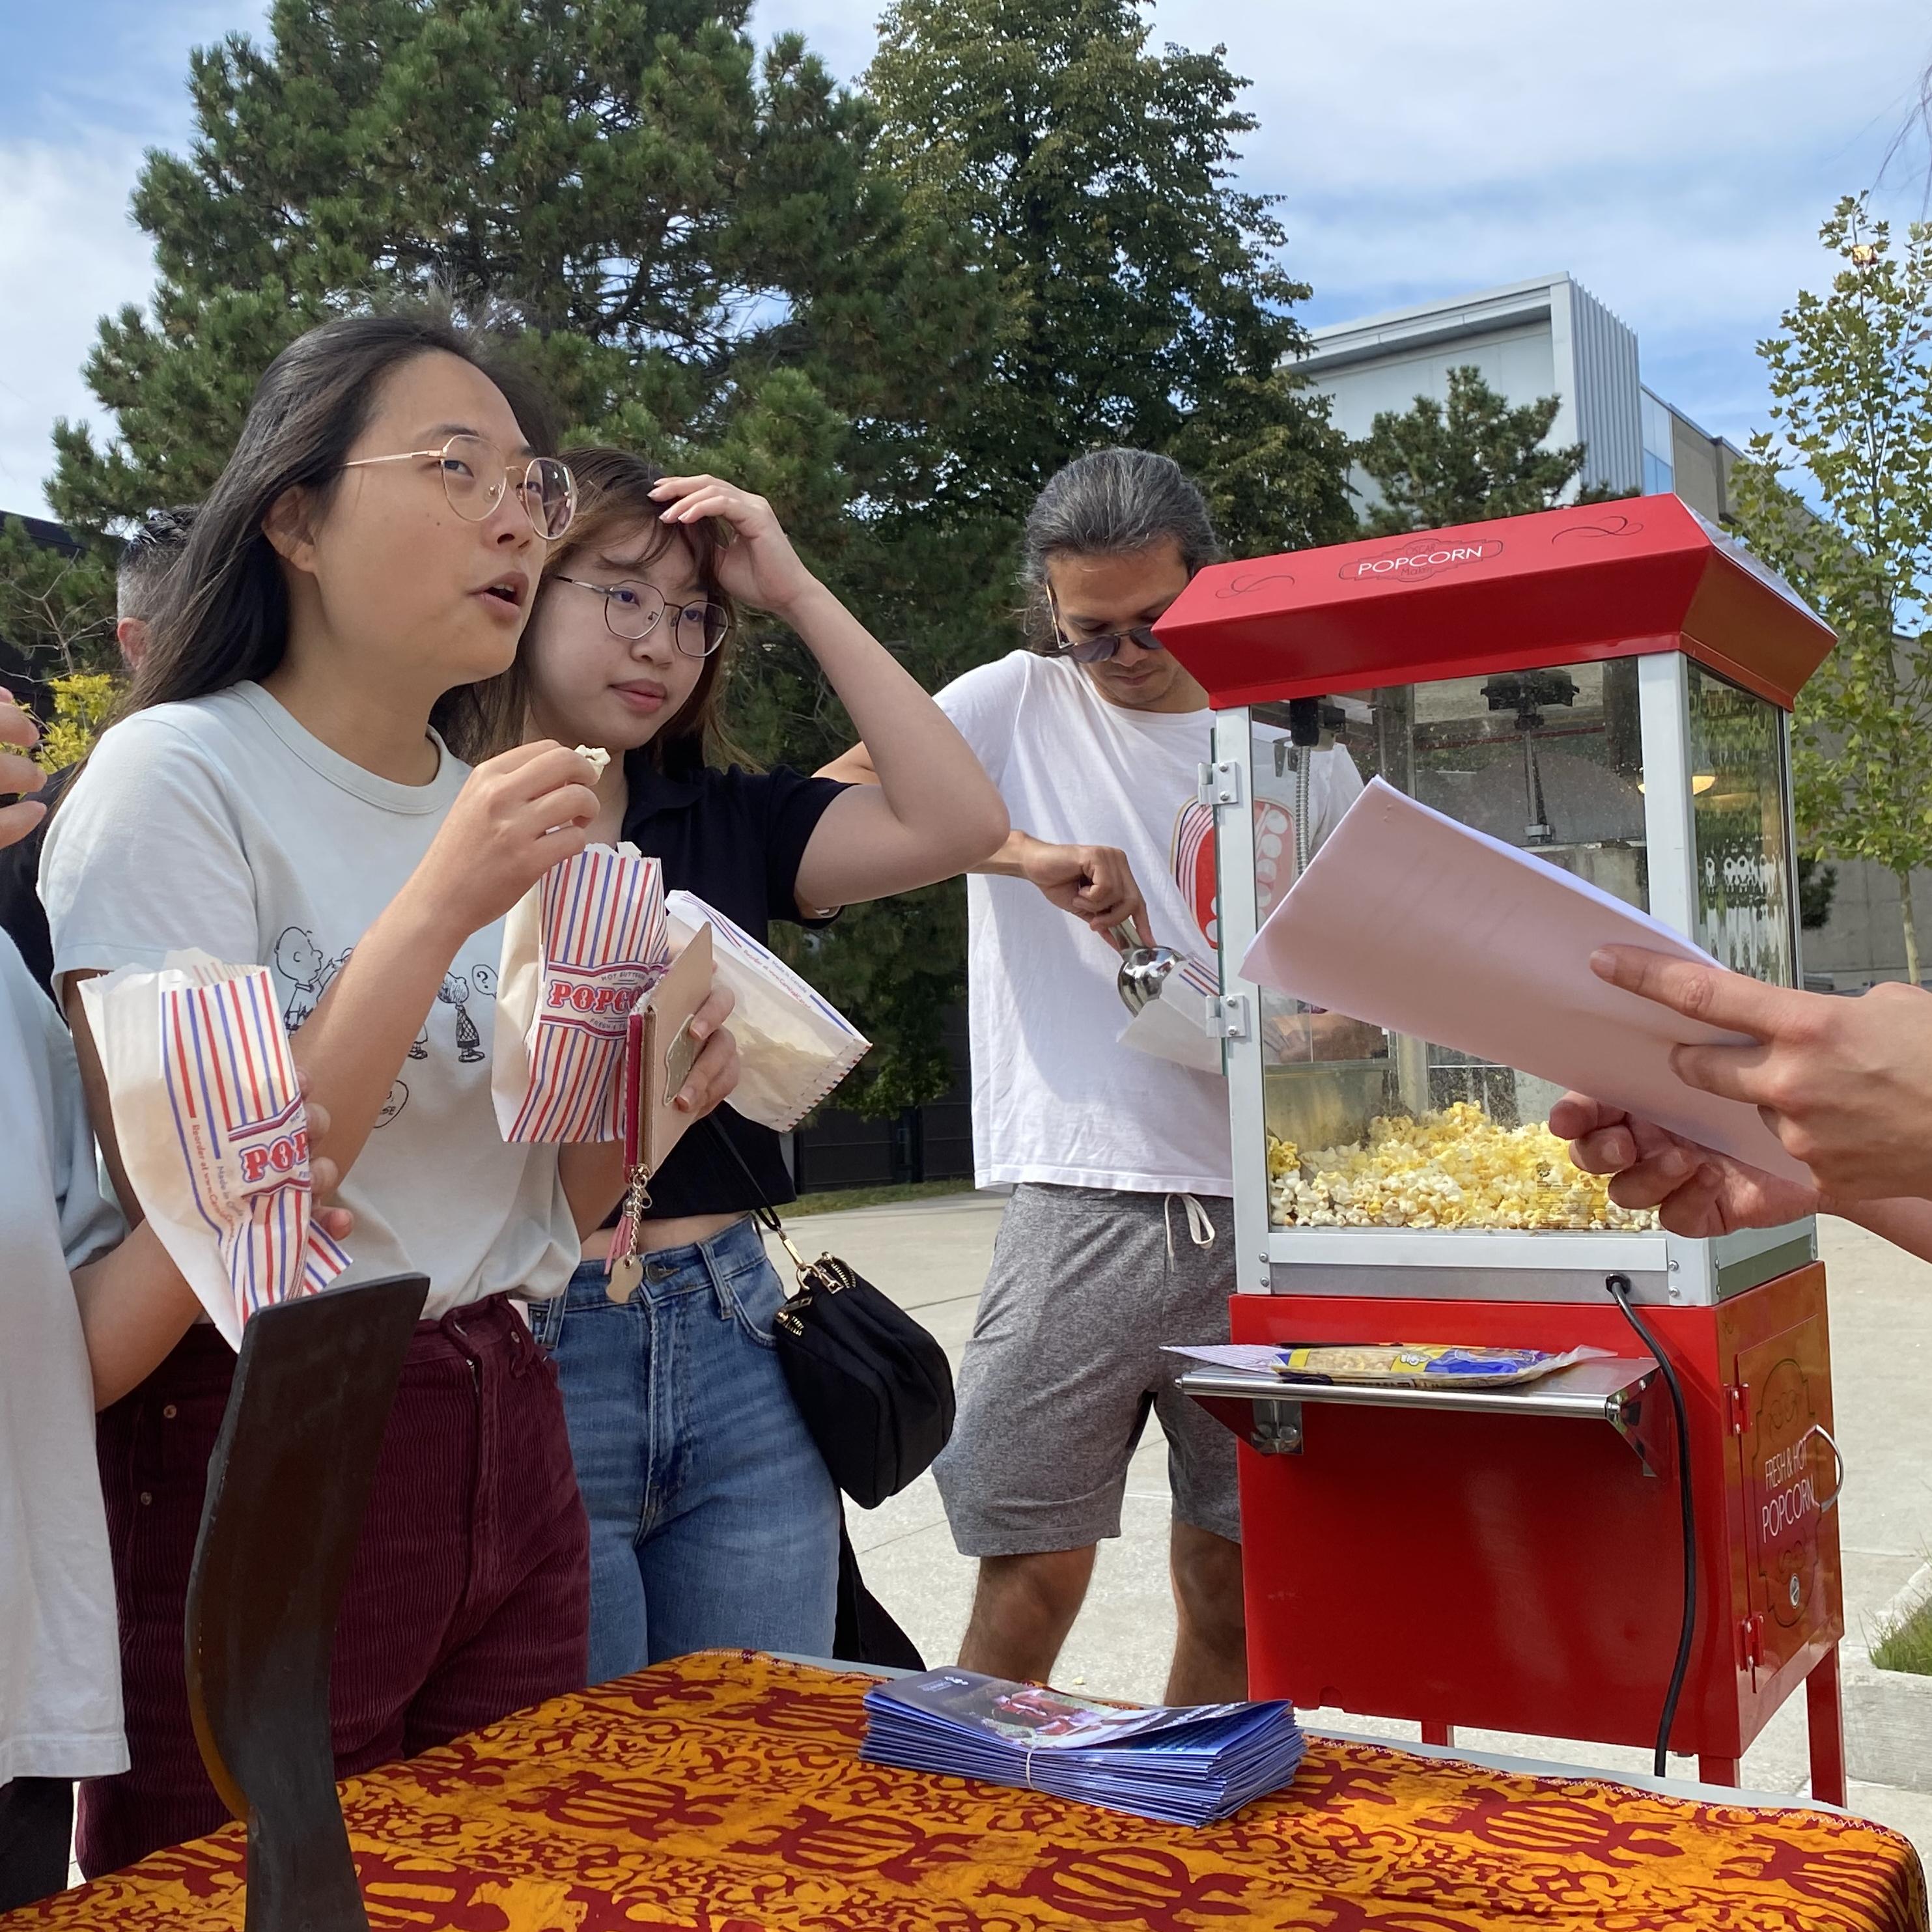 Students sampling some free popcorn